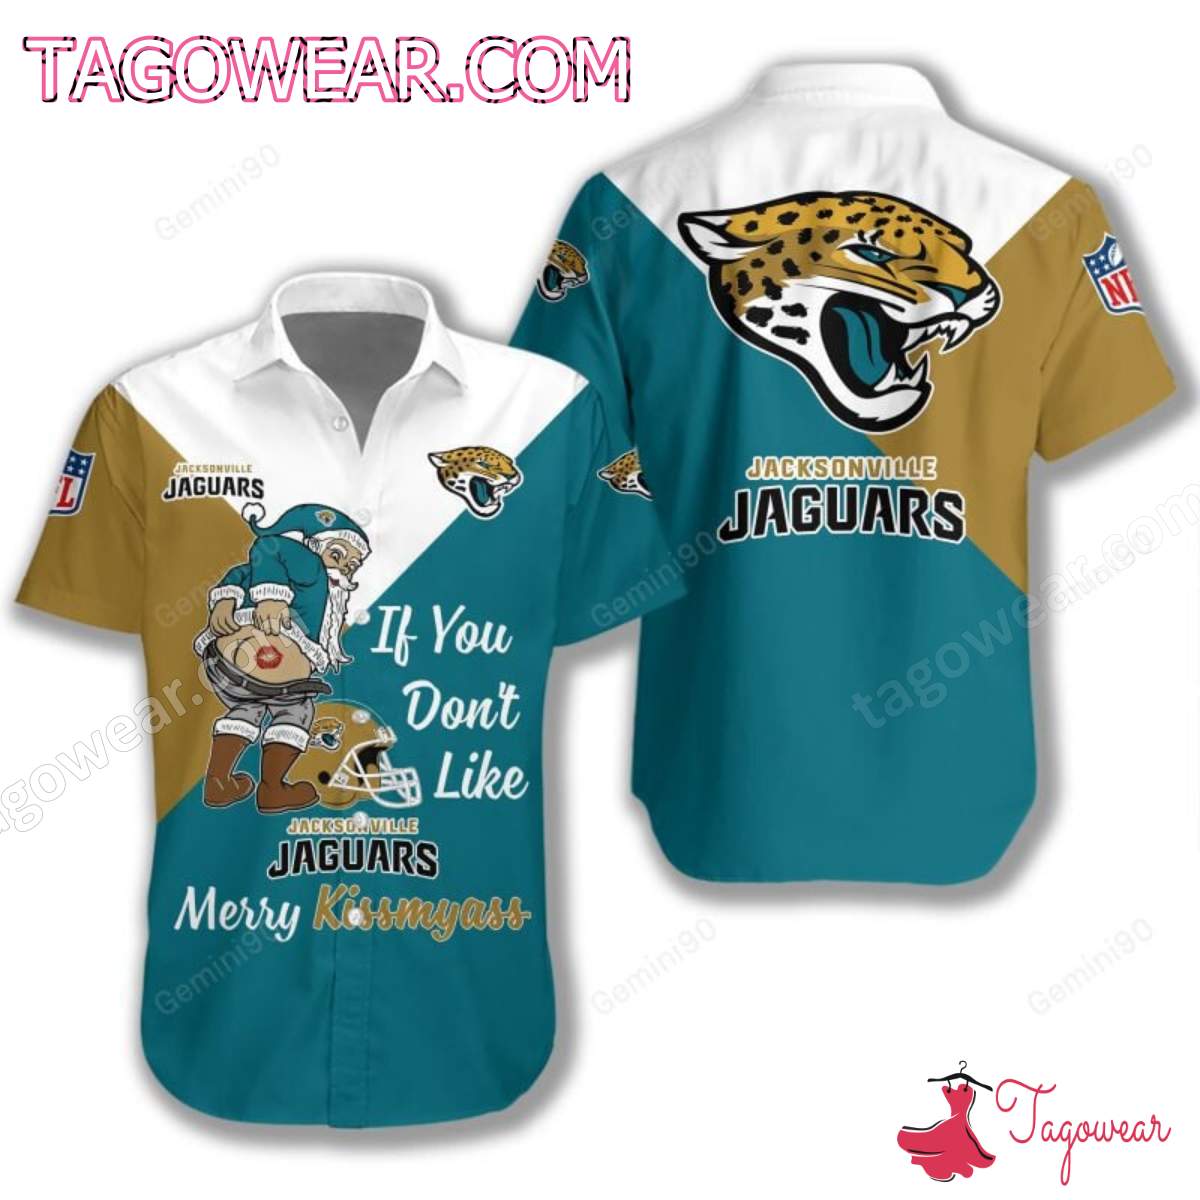 If You Don't Like Jacksonville Jaguars Merry Kissmyass T-shirt, Polo, Hoodie a